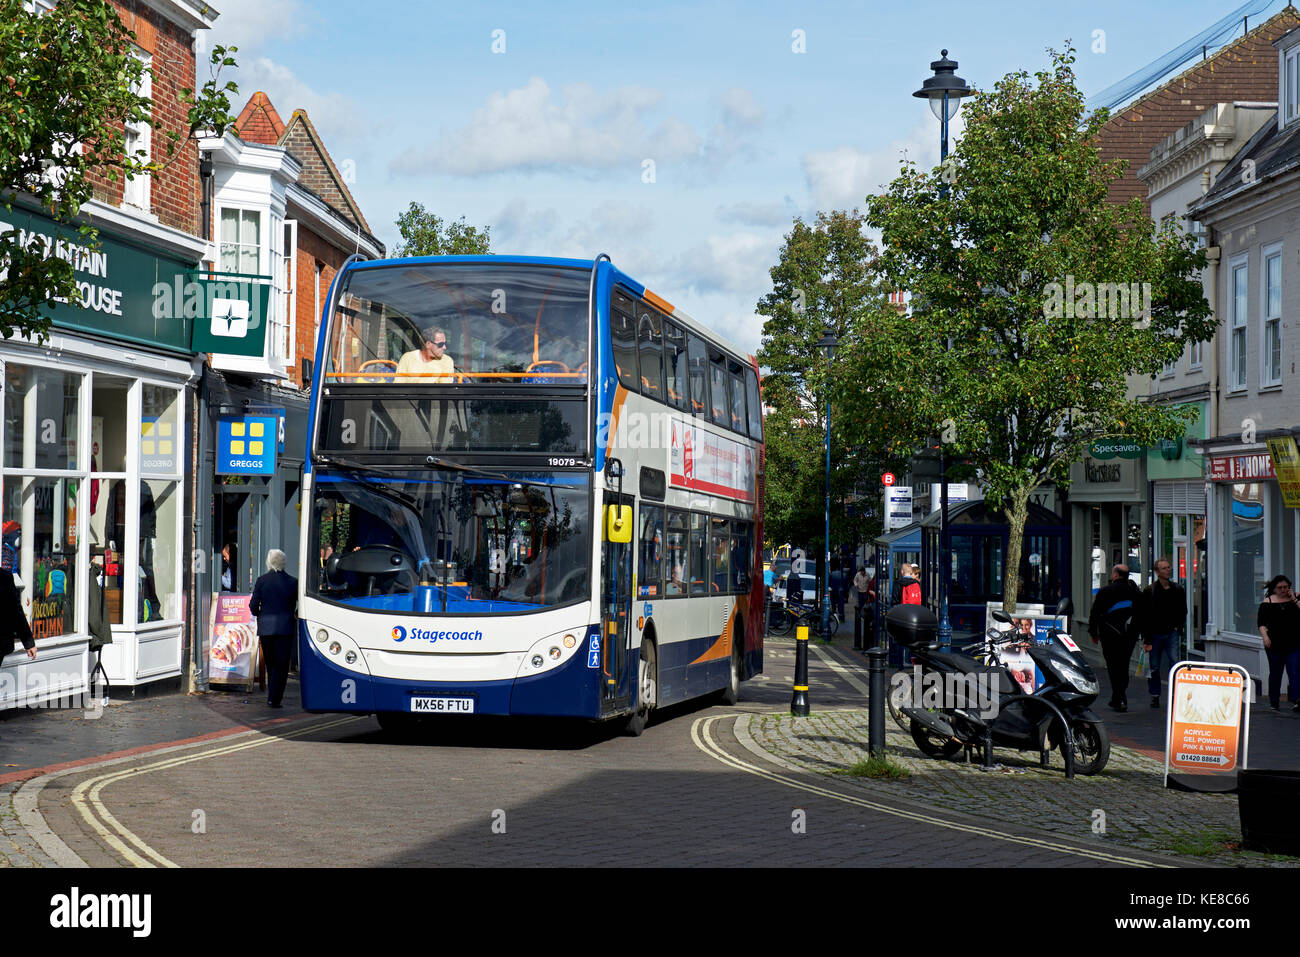 Bus on Main Street, Alton, Hampshire, England UK Stock Photo